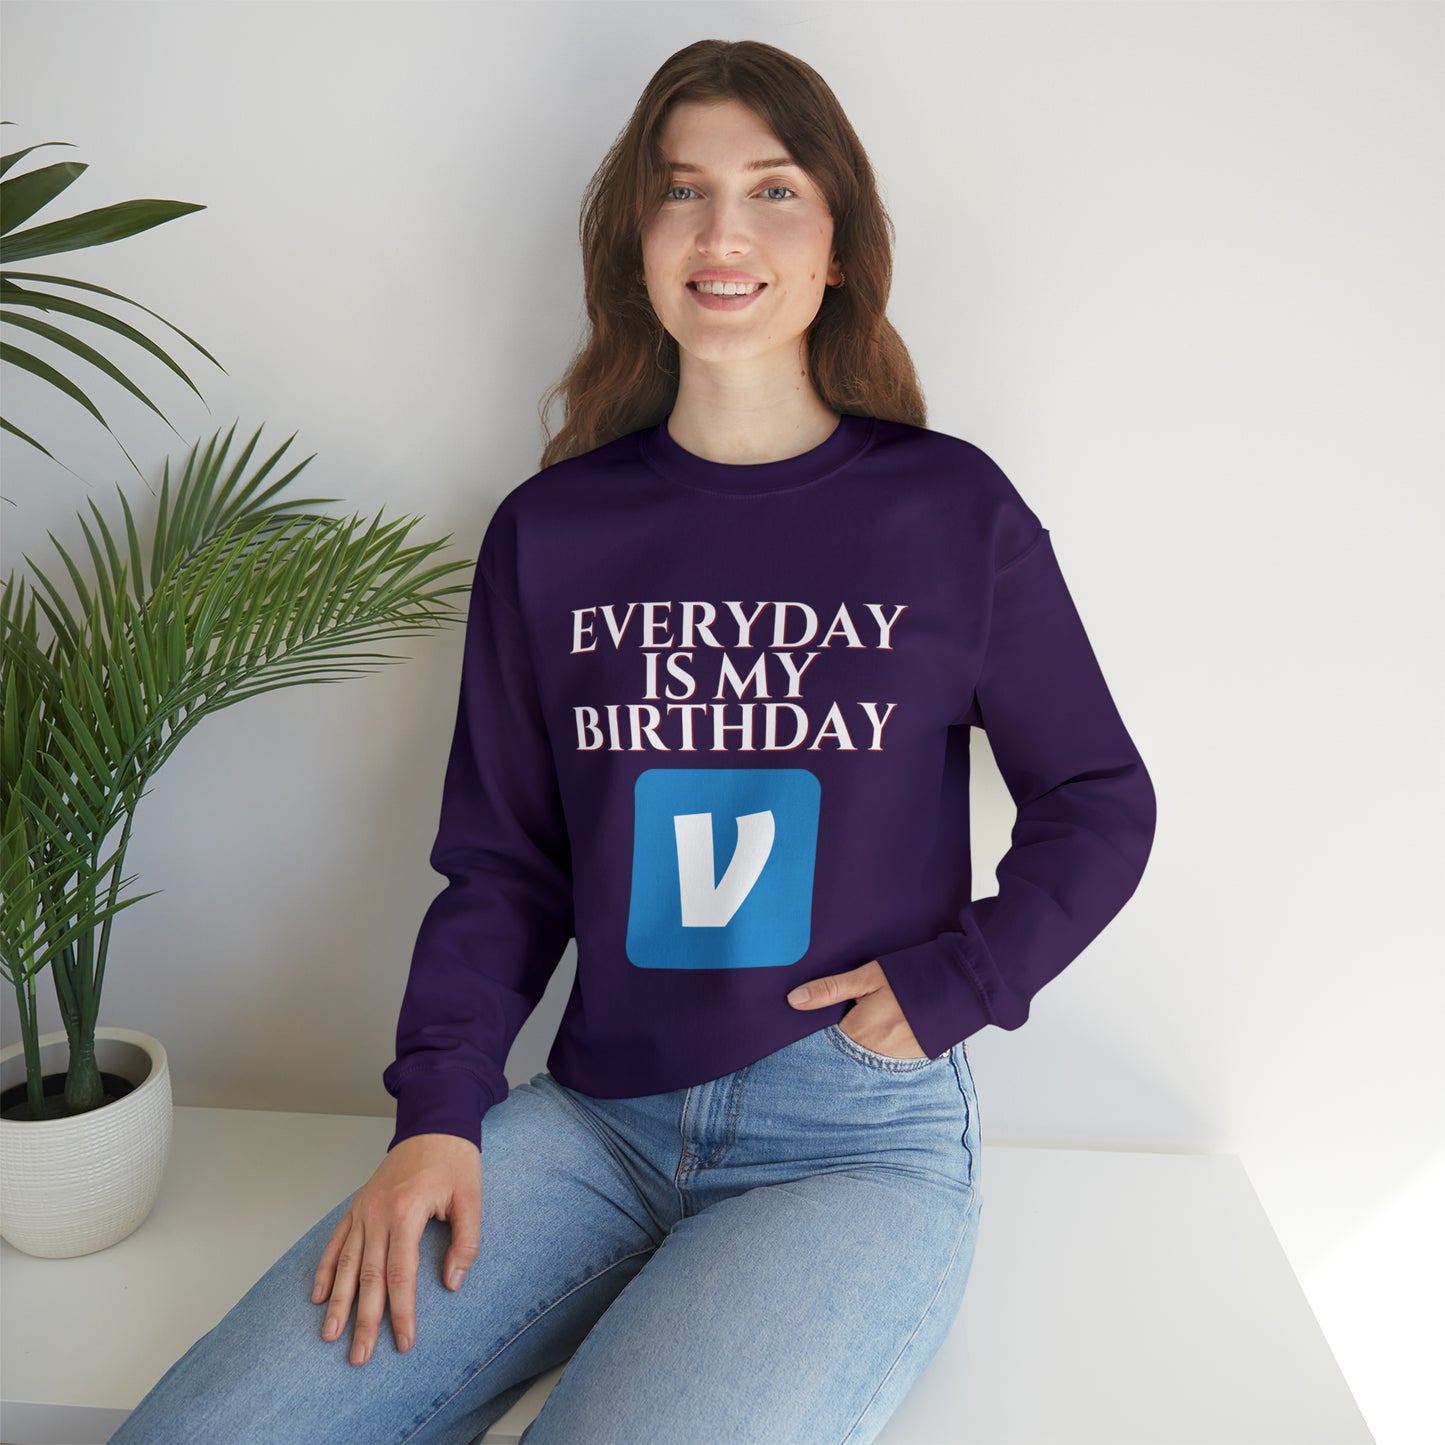 Its Yo Birthday Sweatshirt (Customizable)